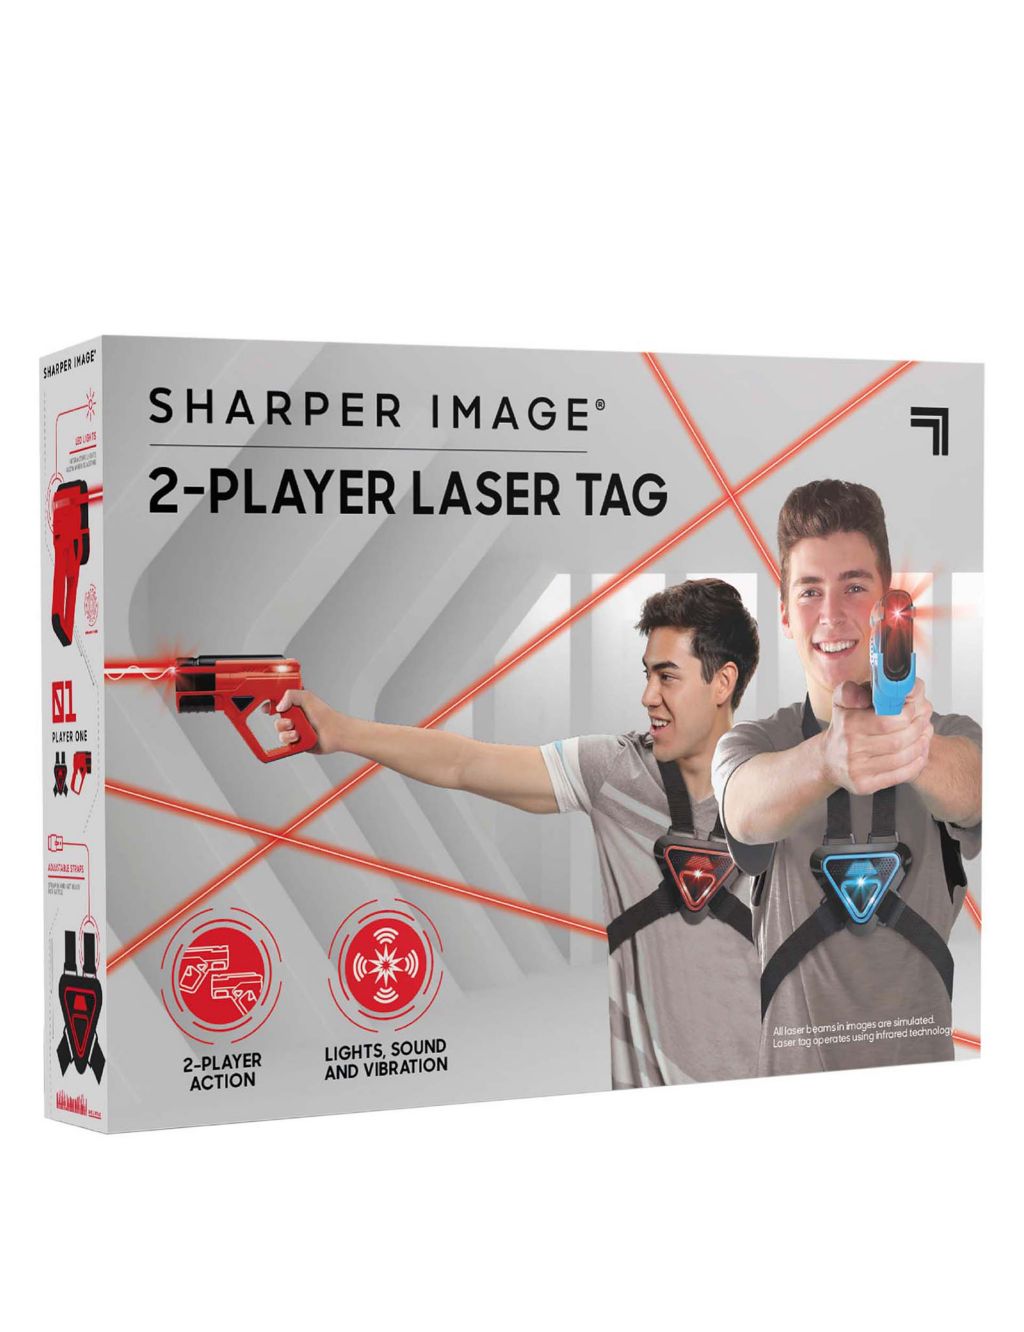 Toy Laser Tag Shooting Game